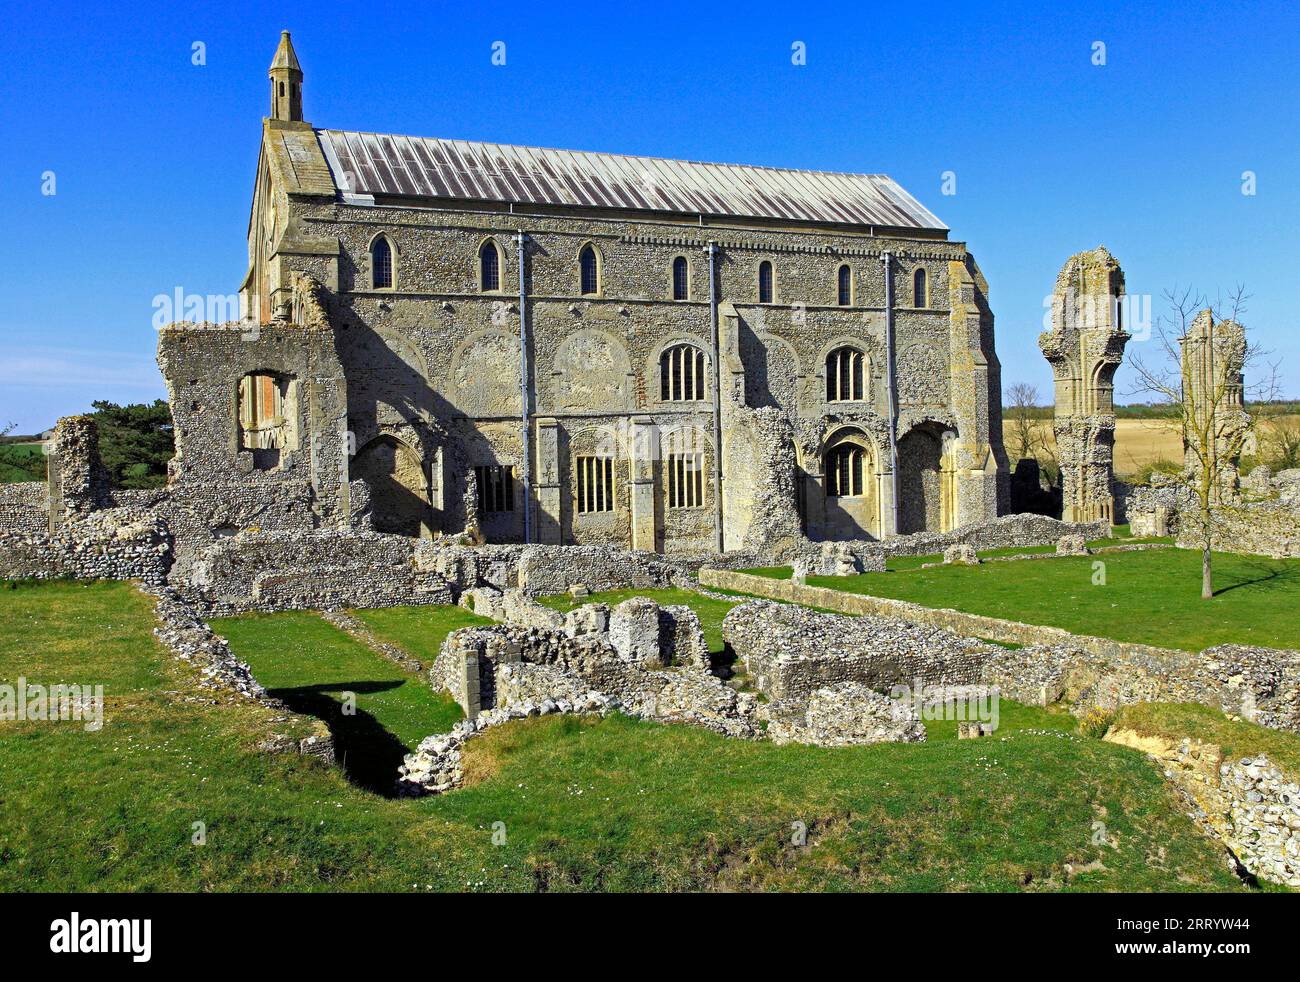 Binham Priory, Norfolk, Church and monastic ruins, Medieval architecture, England Stock Photo